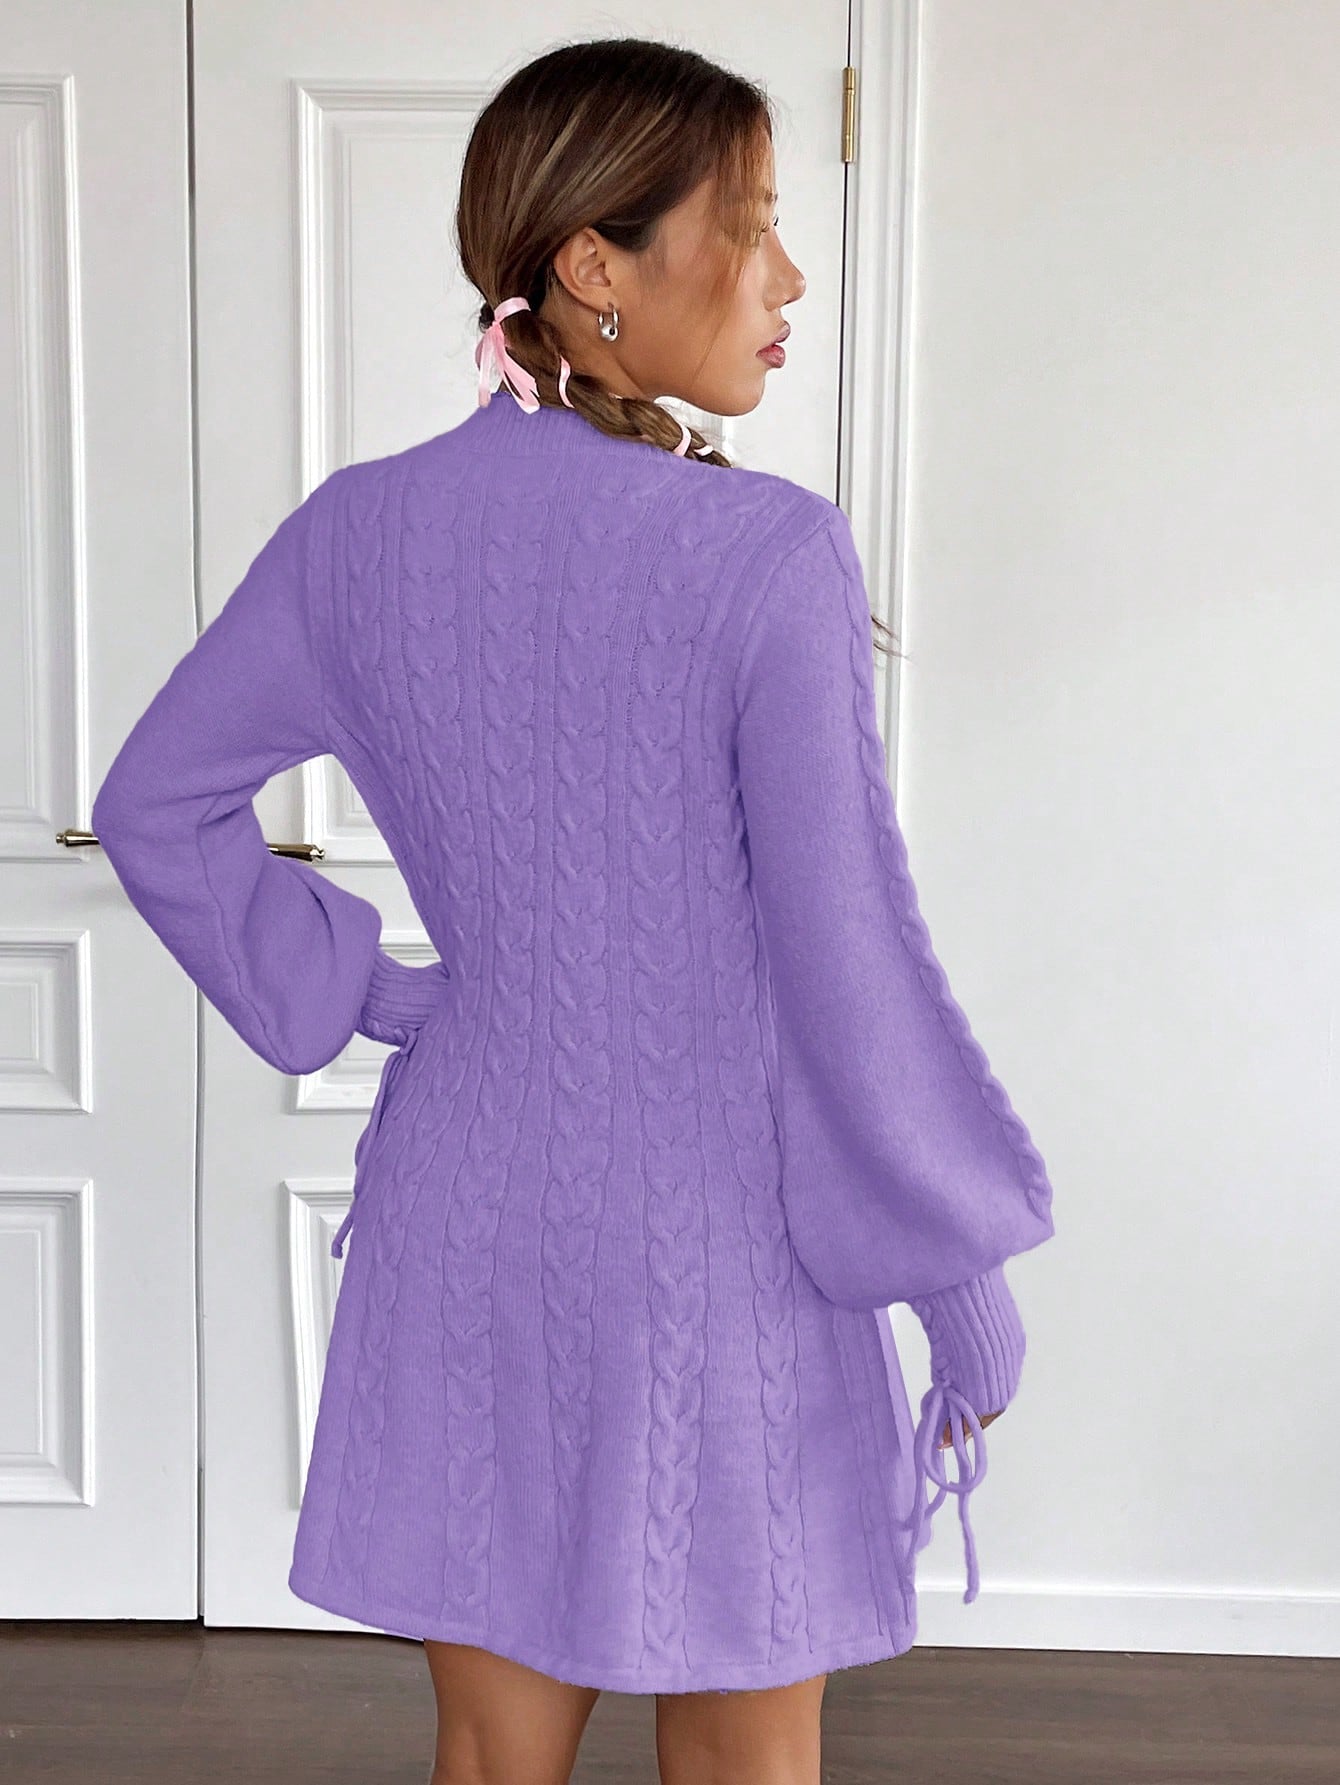 Qutie Women's V-neck Lantern Sleeve Sweater Dress